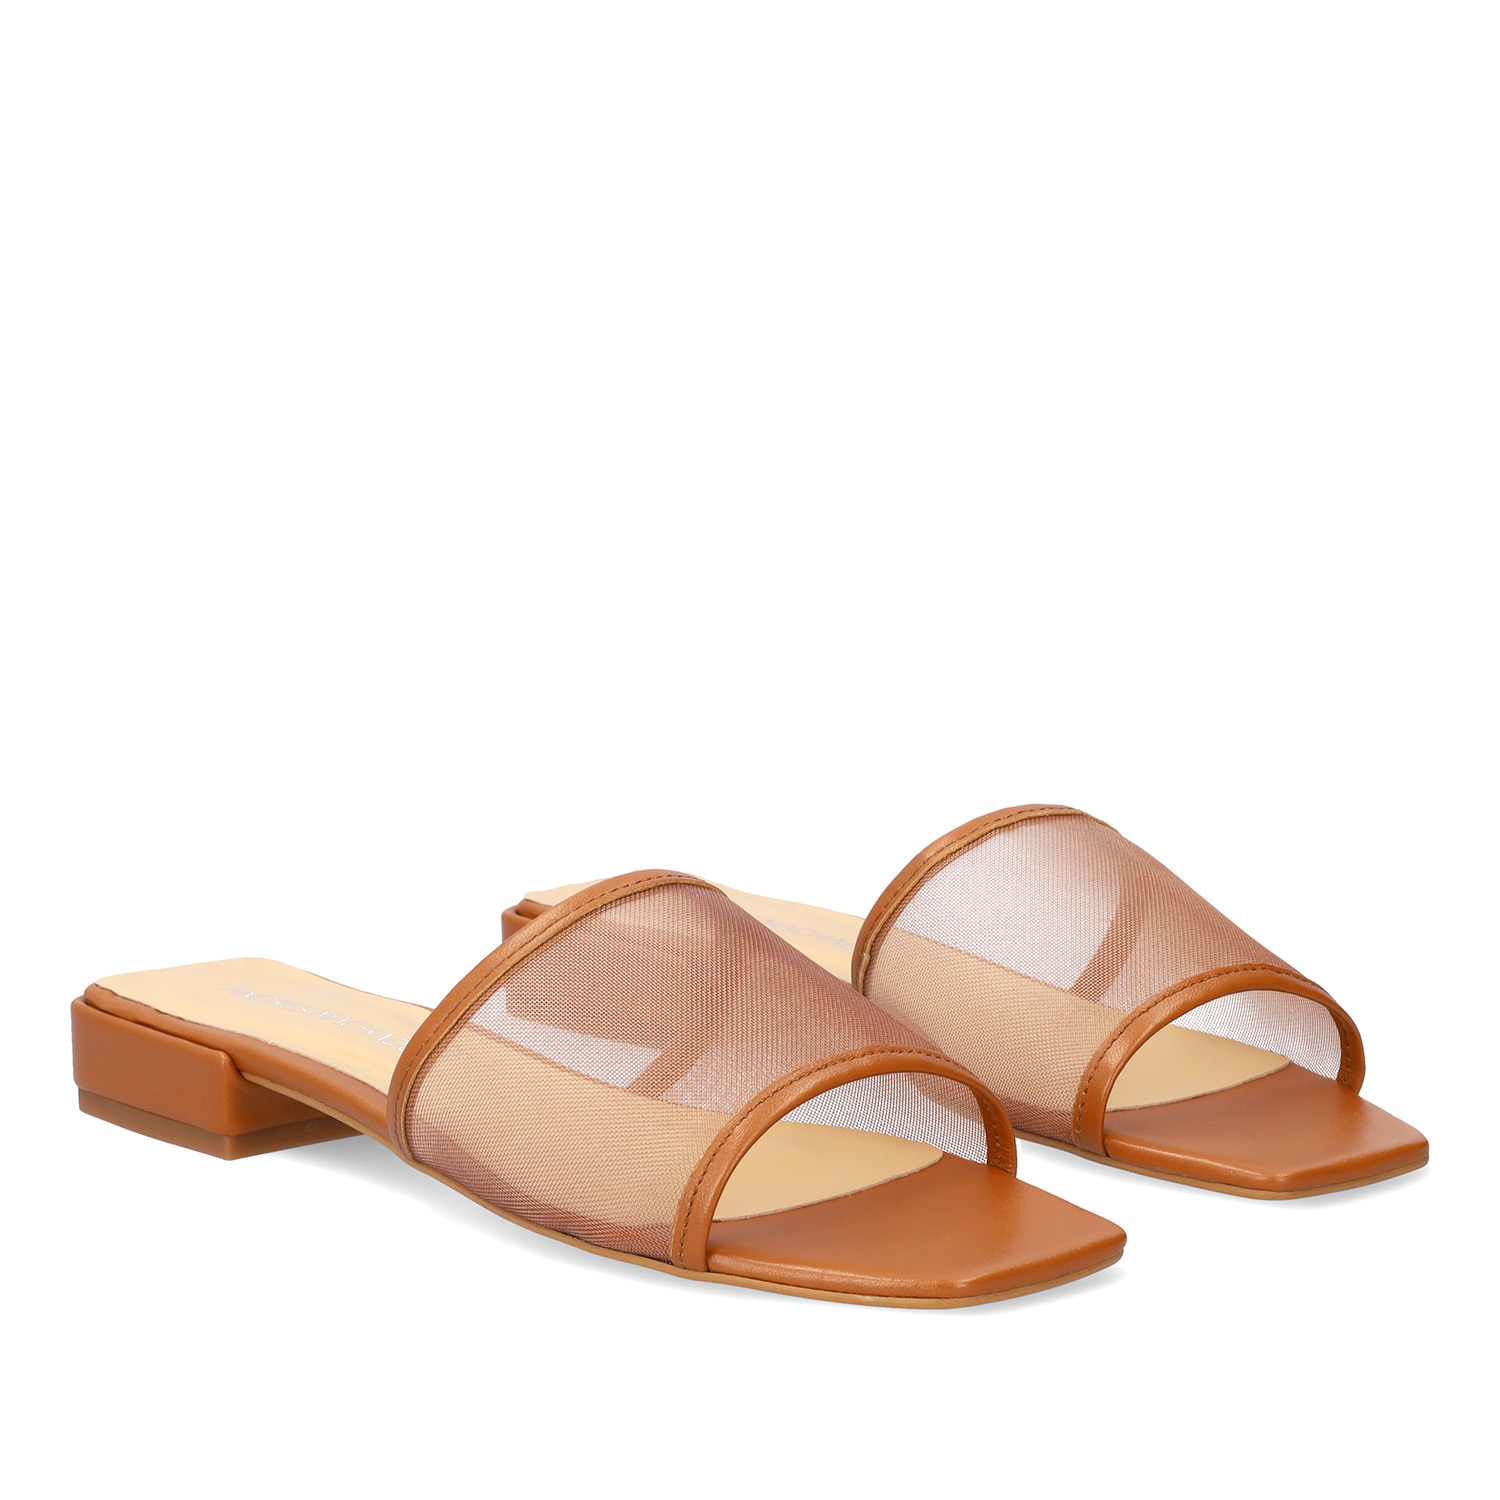 Sandalia plana en piel marrón 